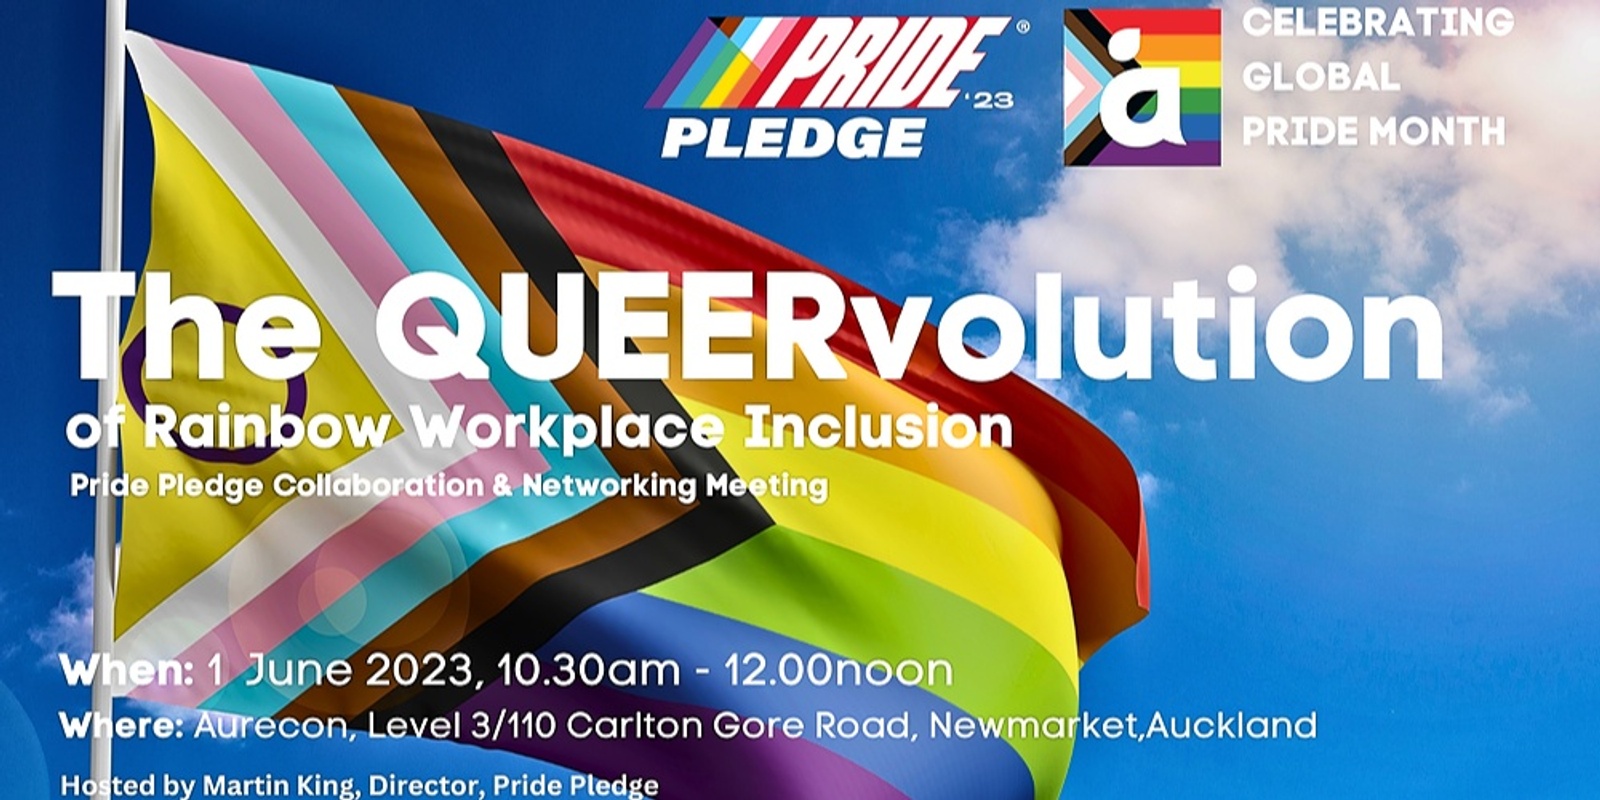 Pride Pledge Global Pride Month Networking Meeting Humanitix